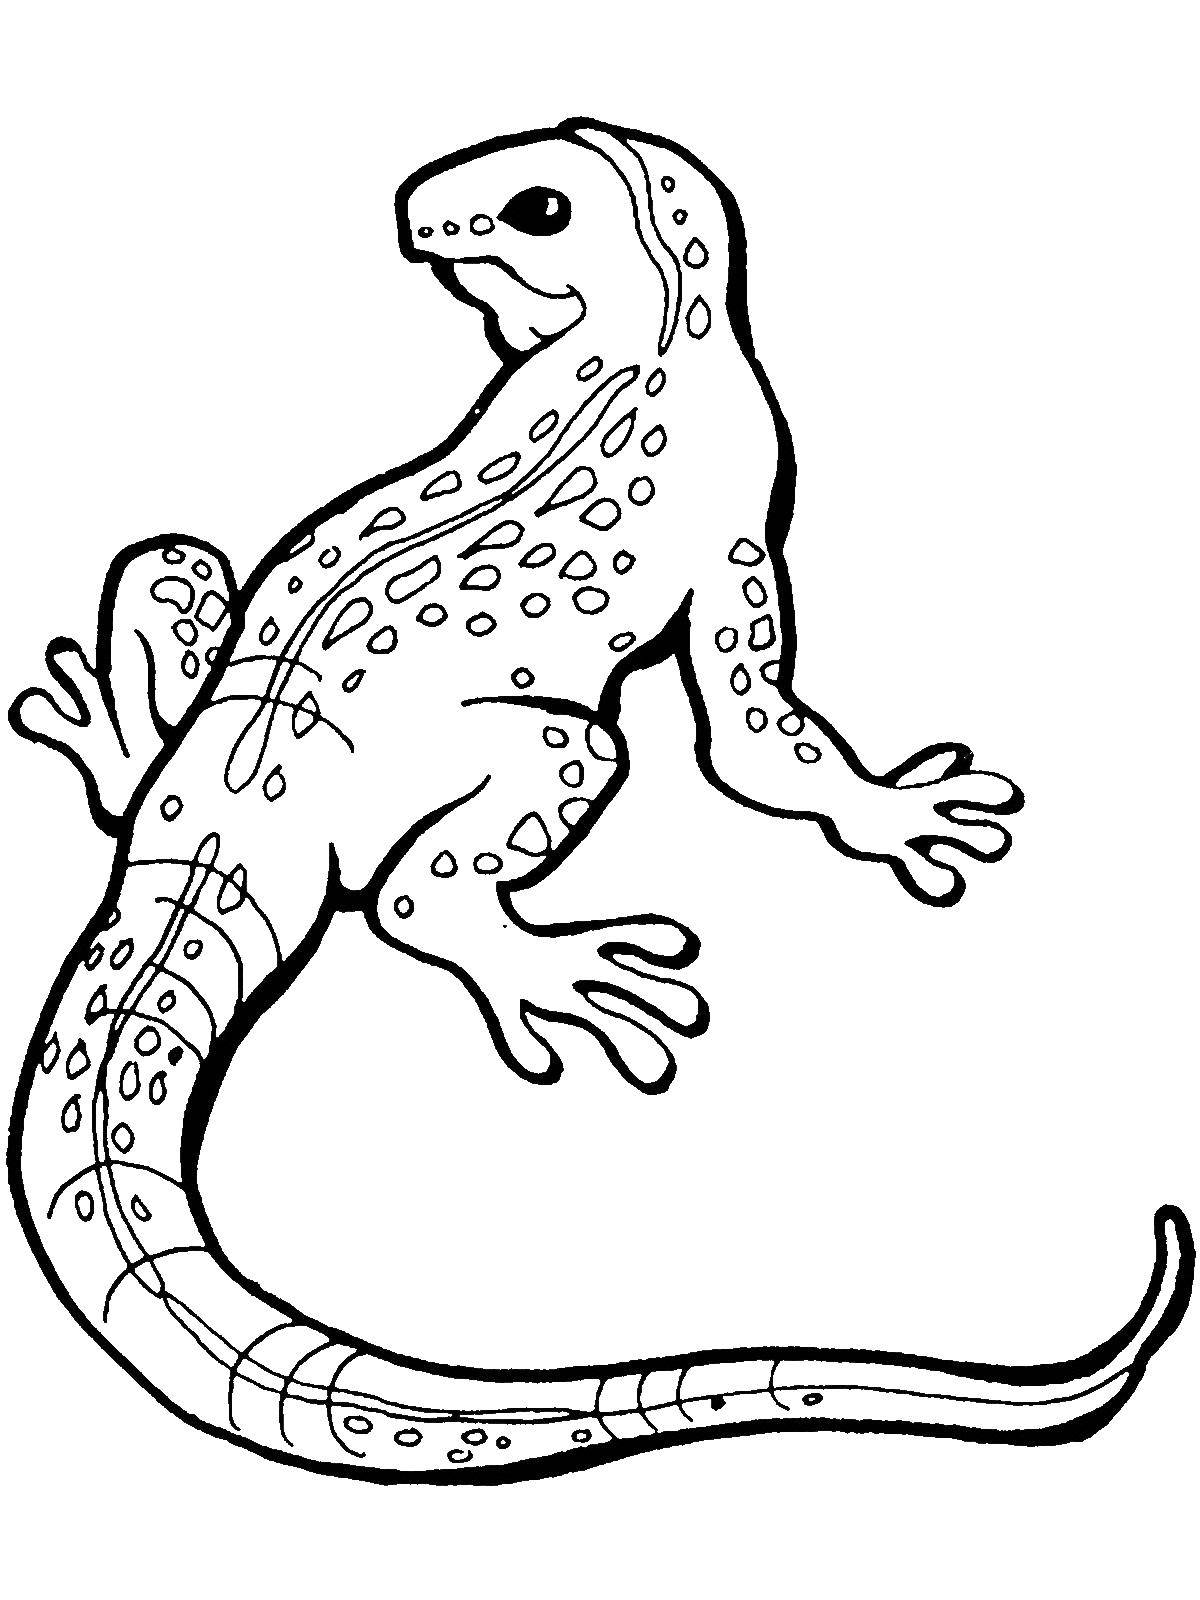 Coloring Lizard. Category reptiles. Tags:  Reptile, lizard.